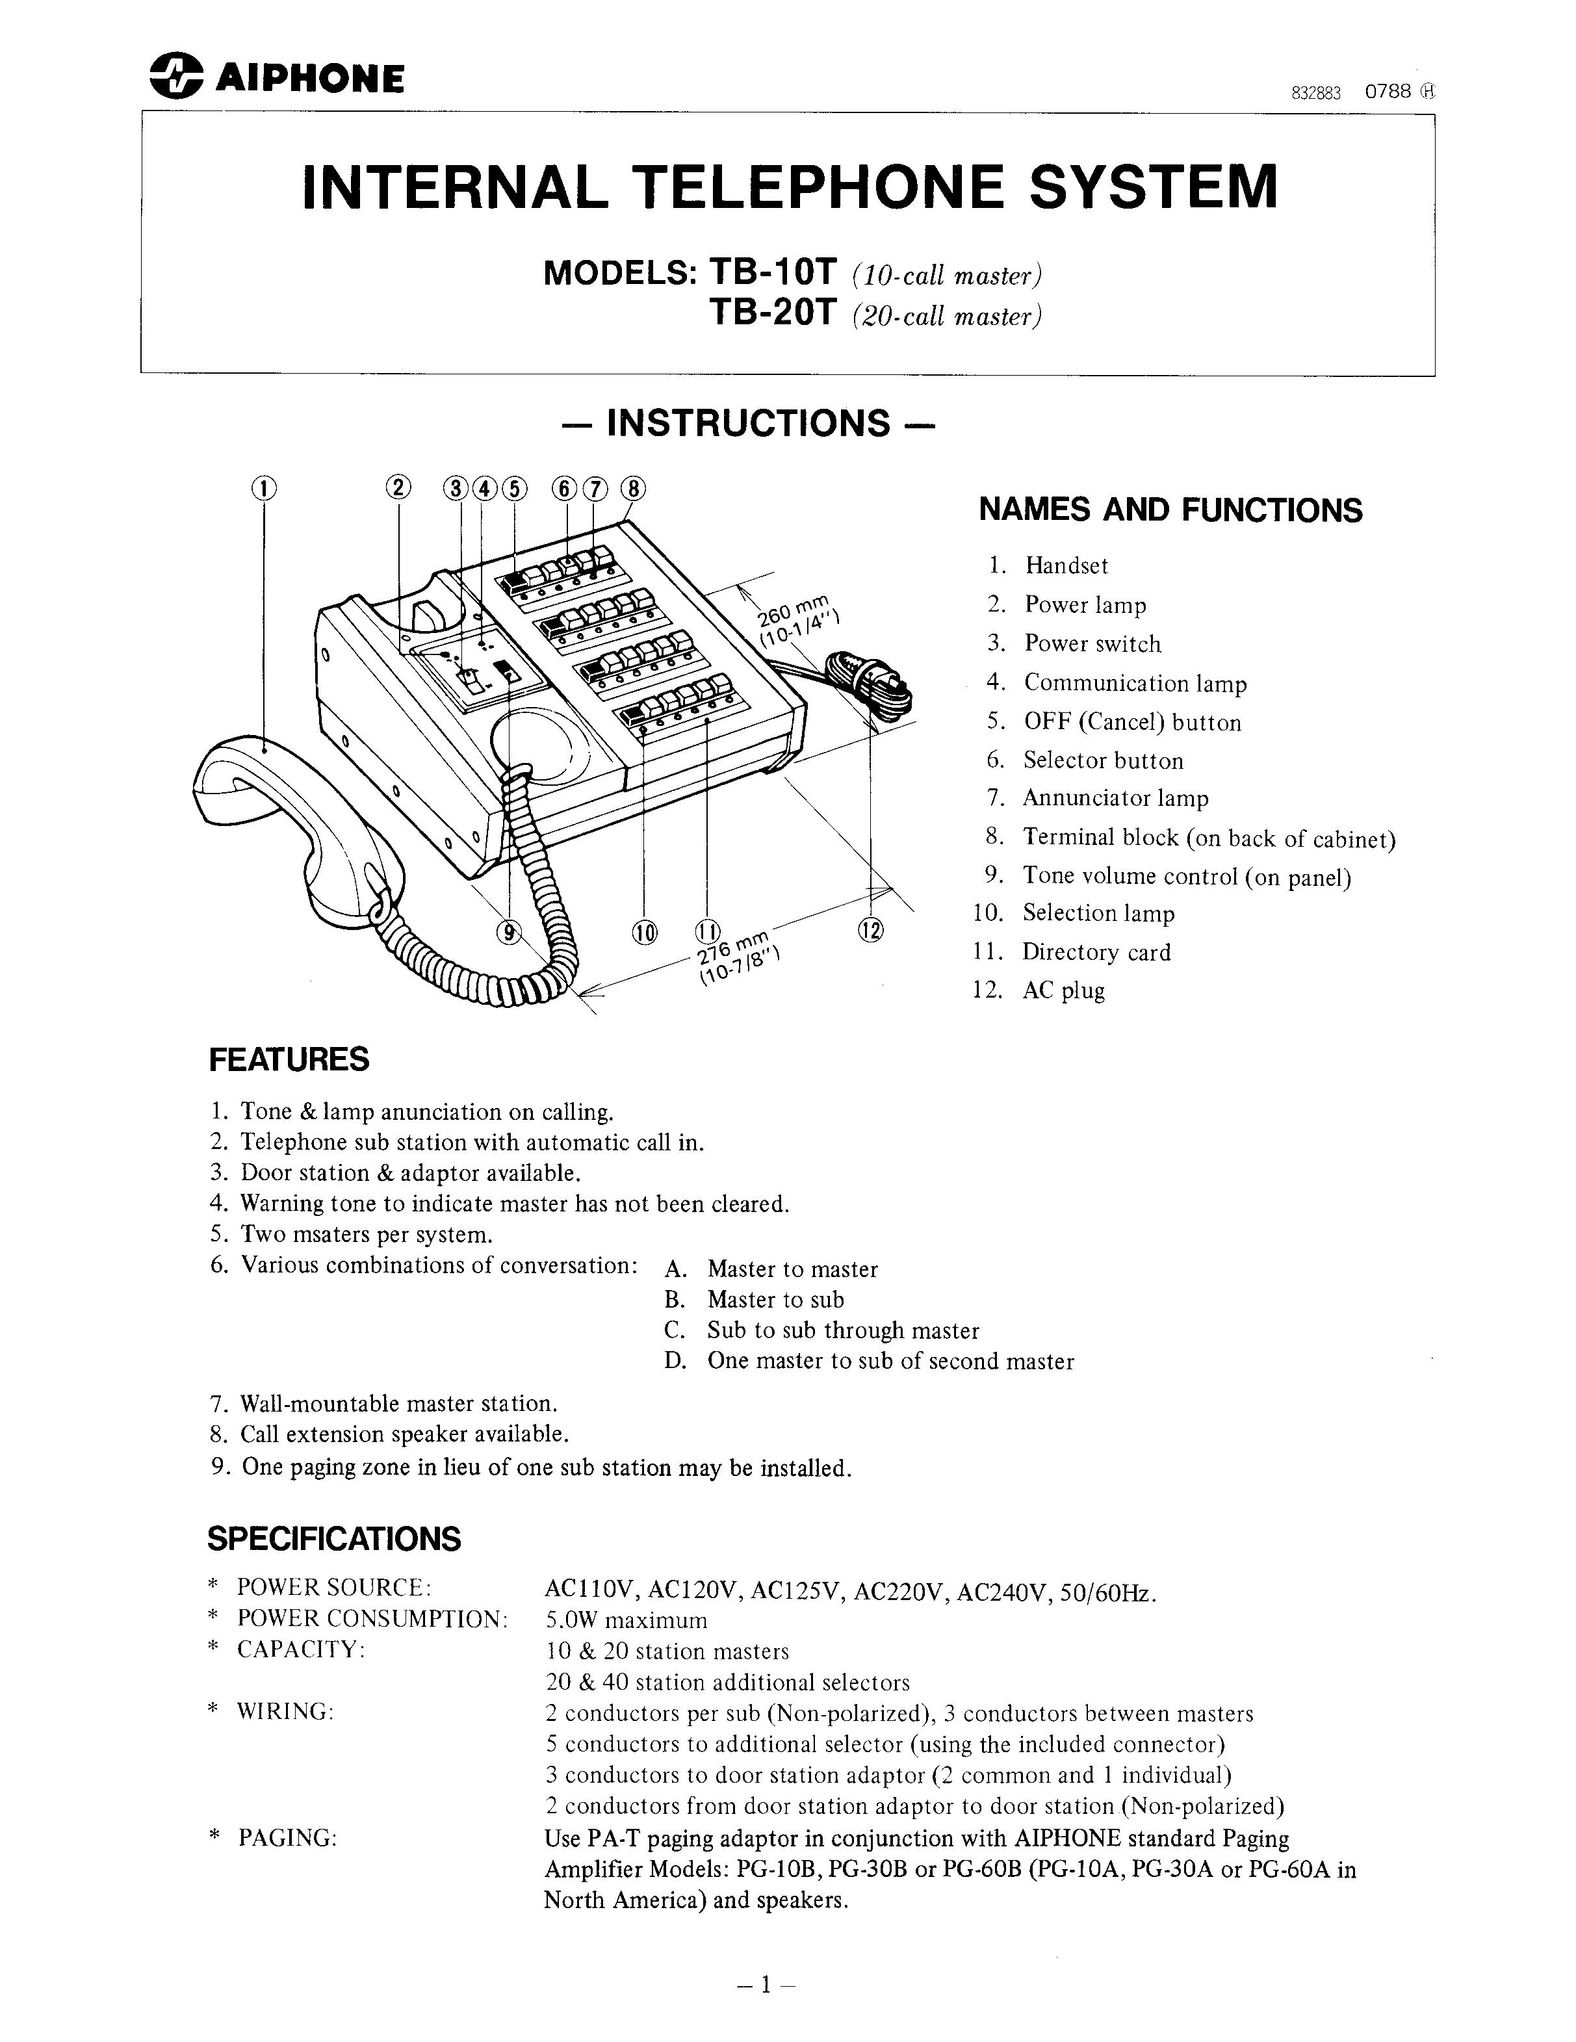 Aiphone TB-20T Telephone User Manual